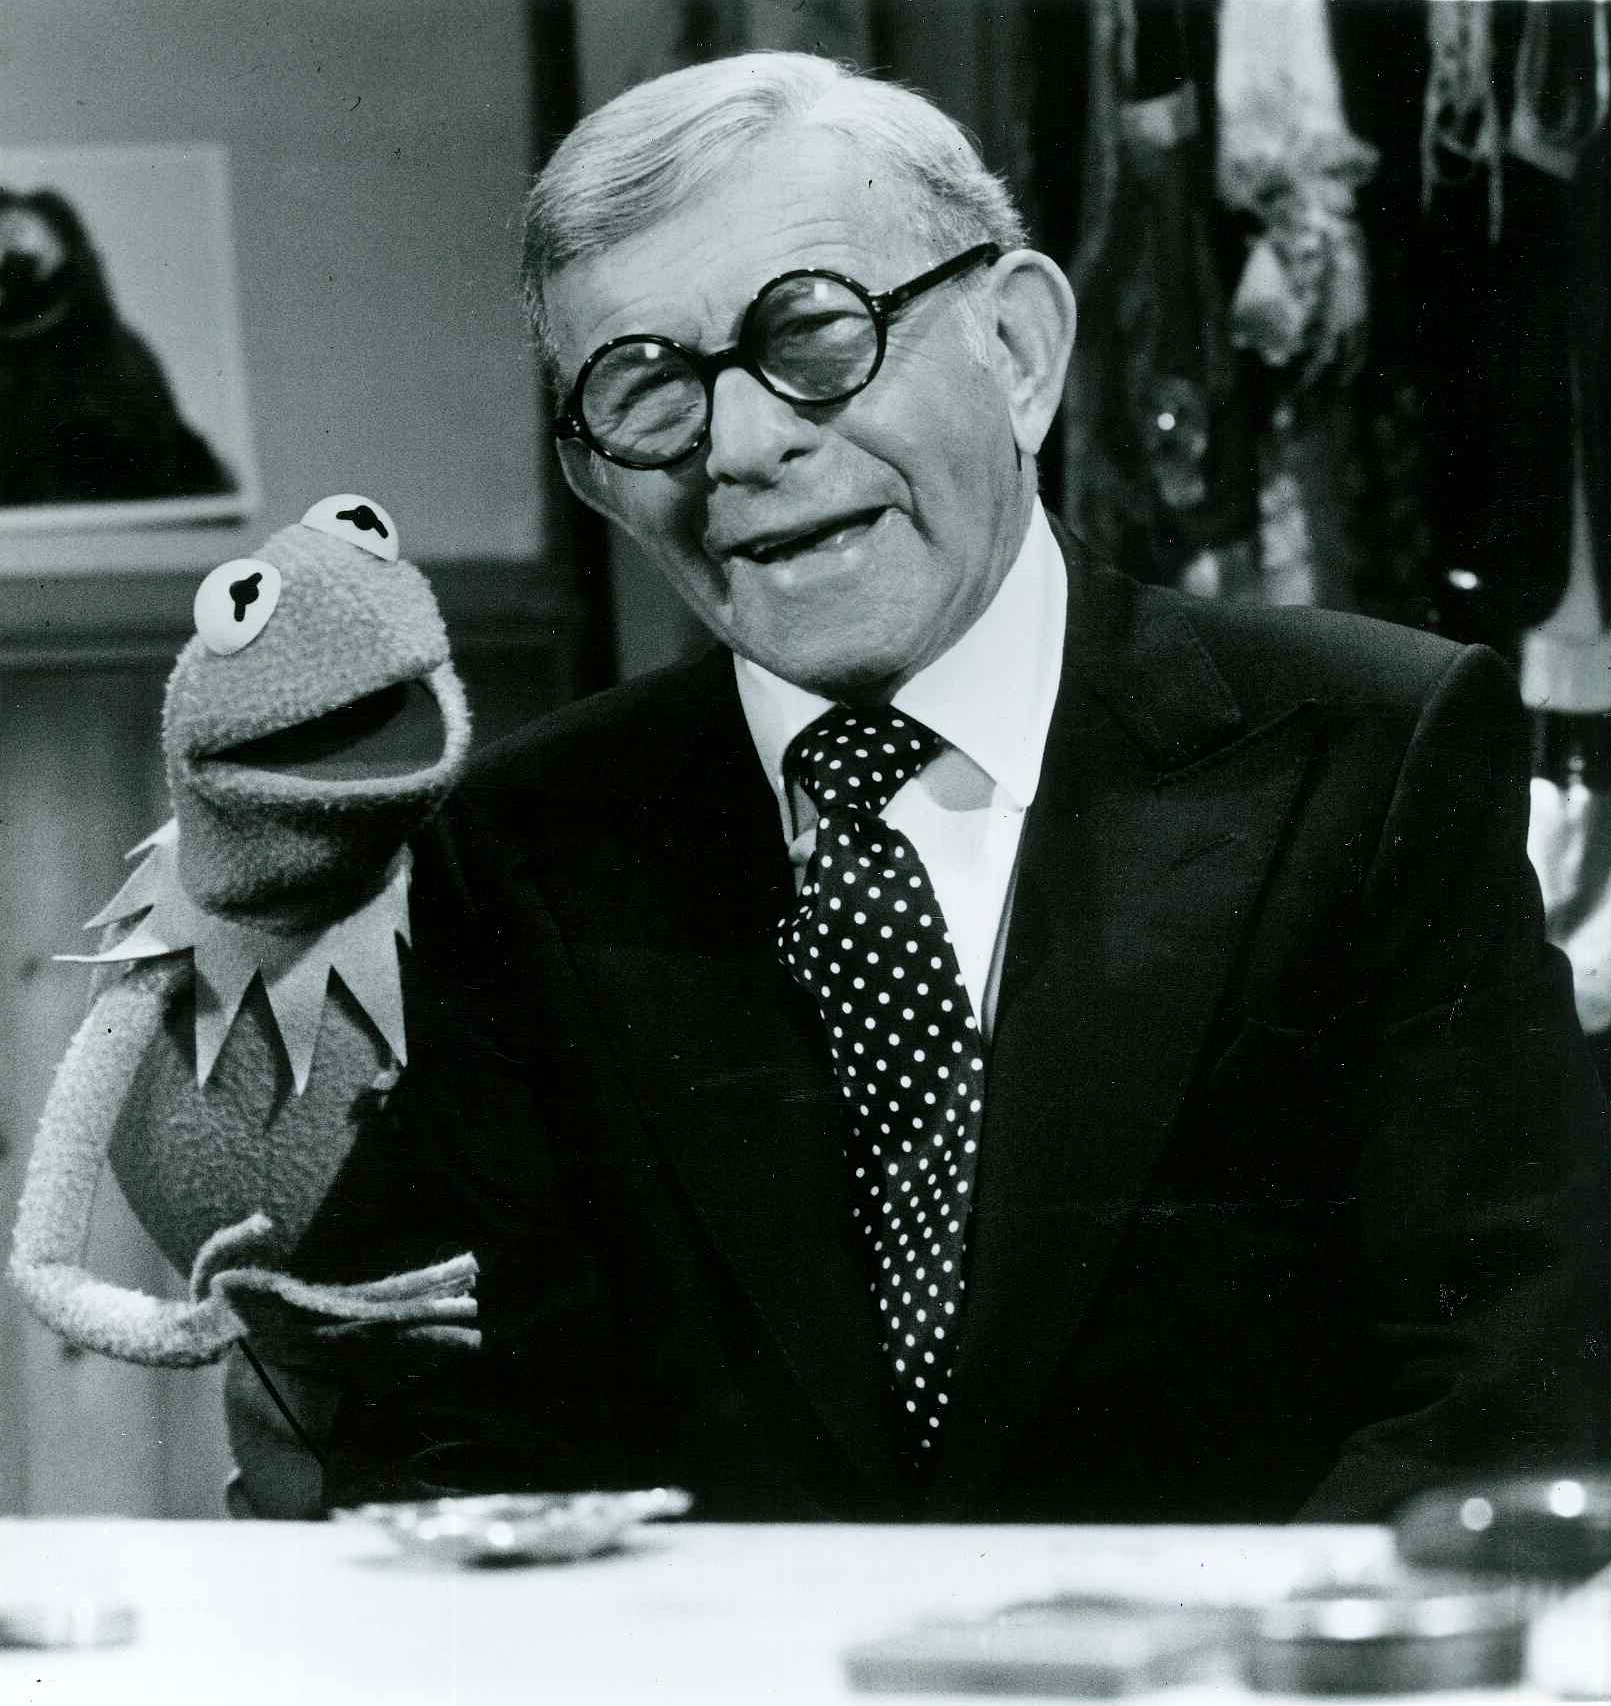 George Burns and Kermit